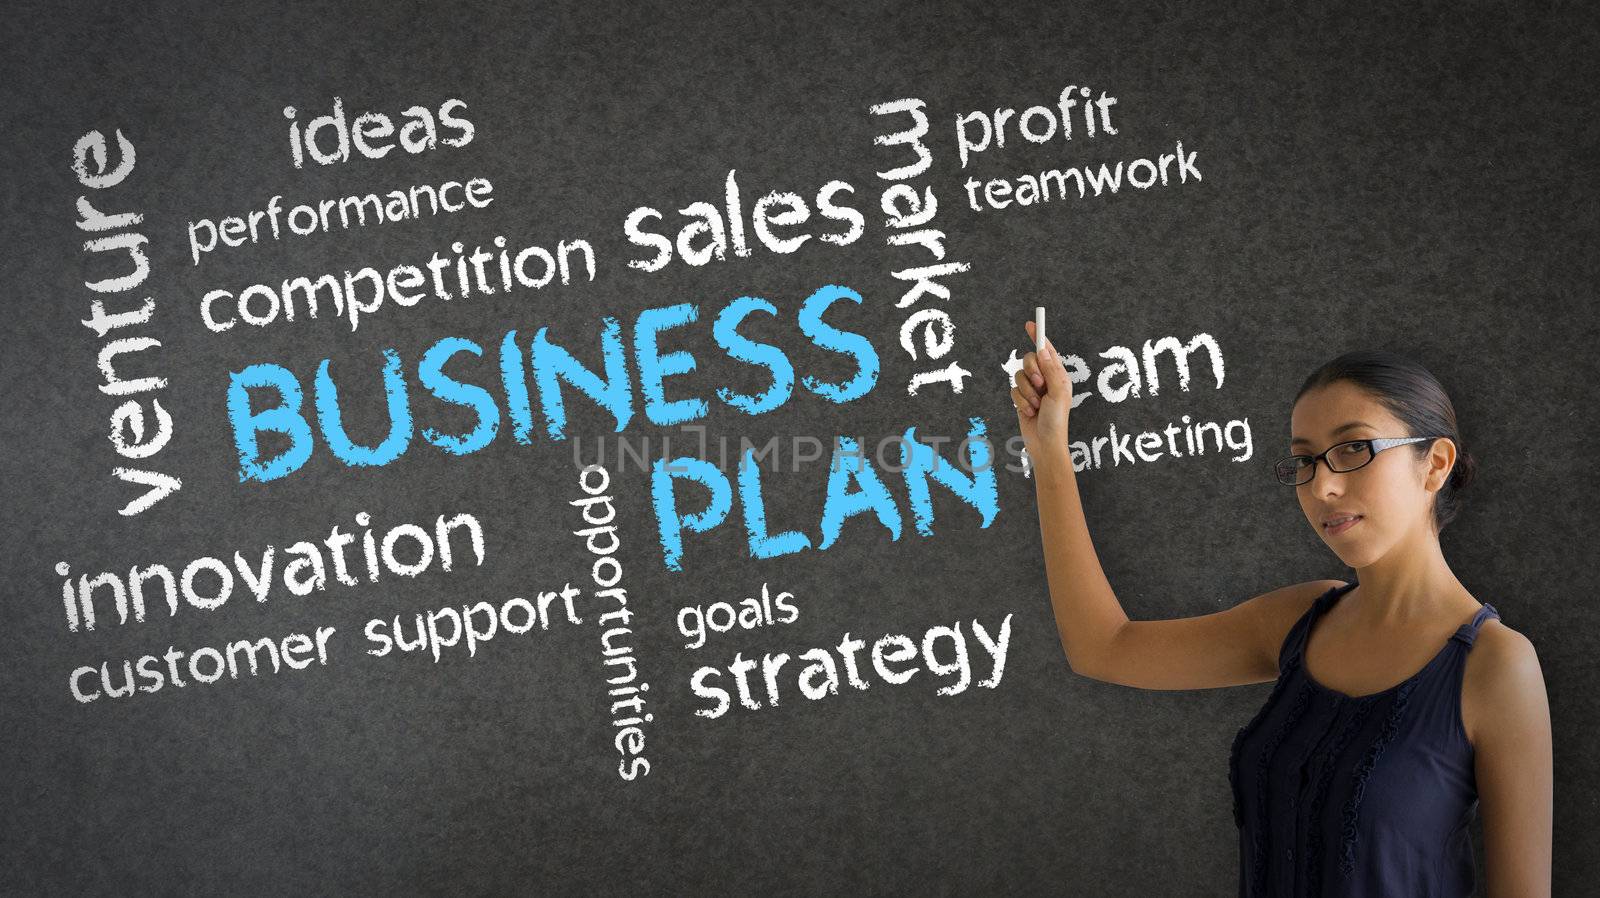 Business Plan by kbuntu